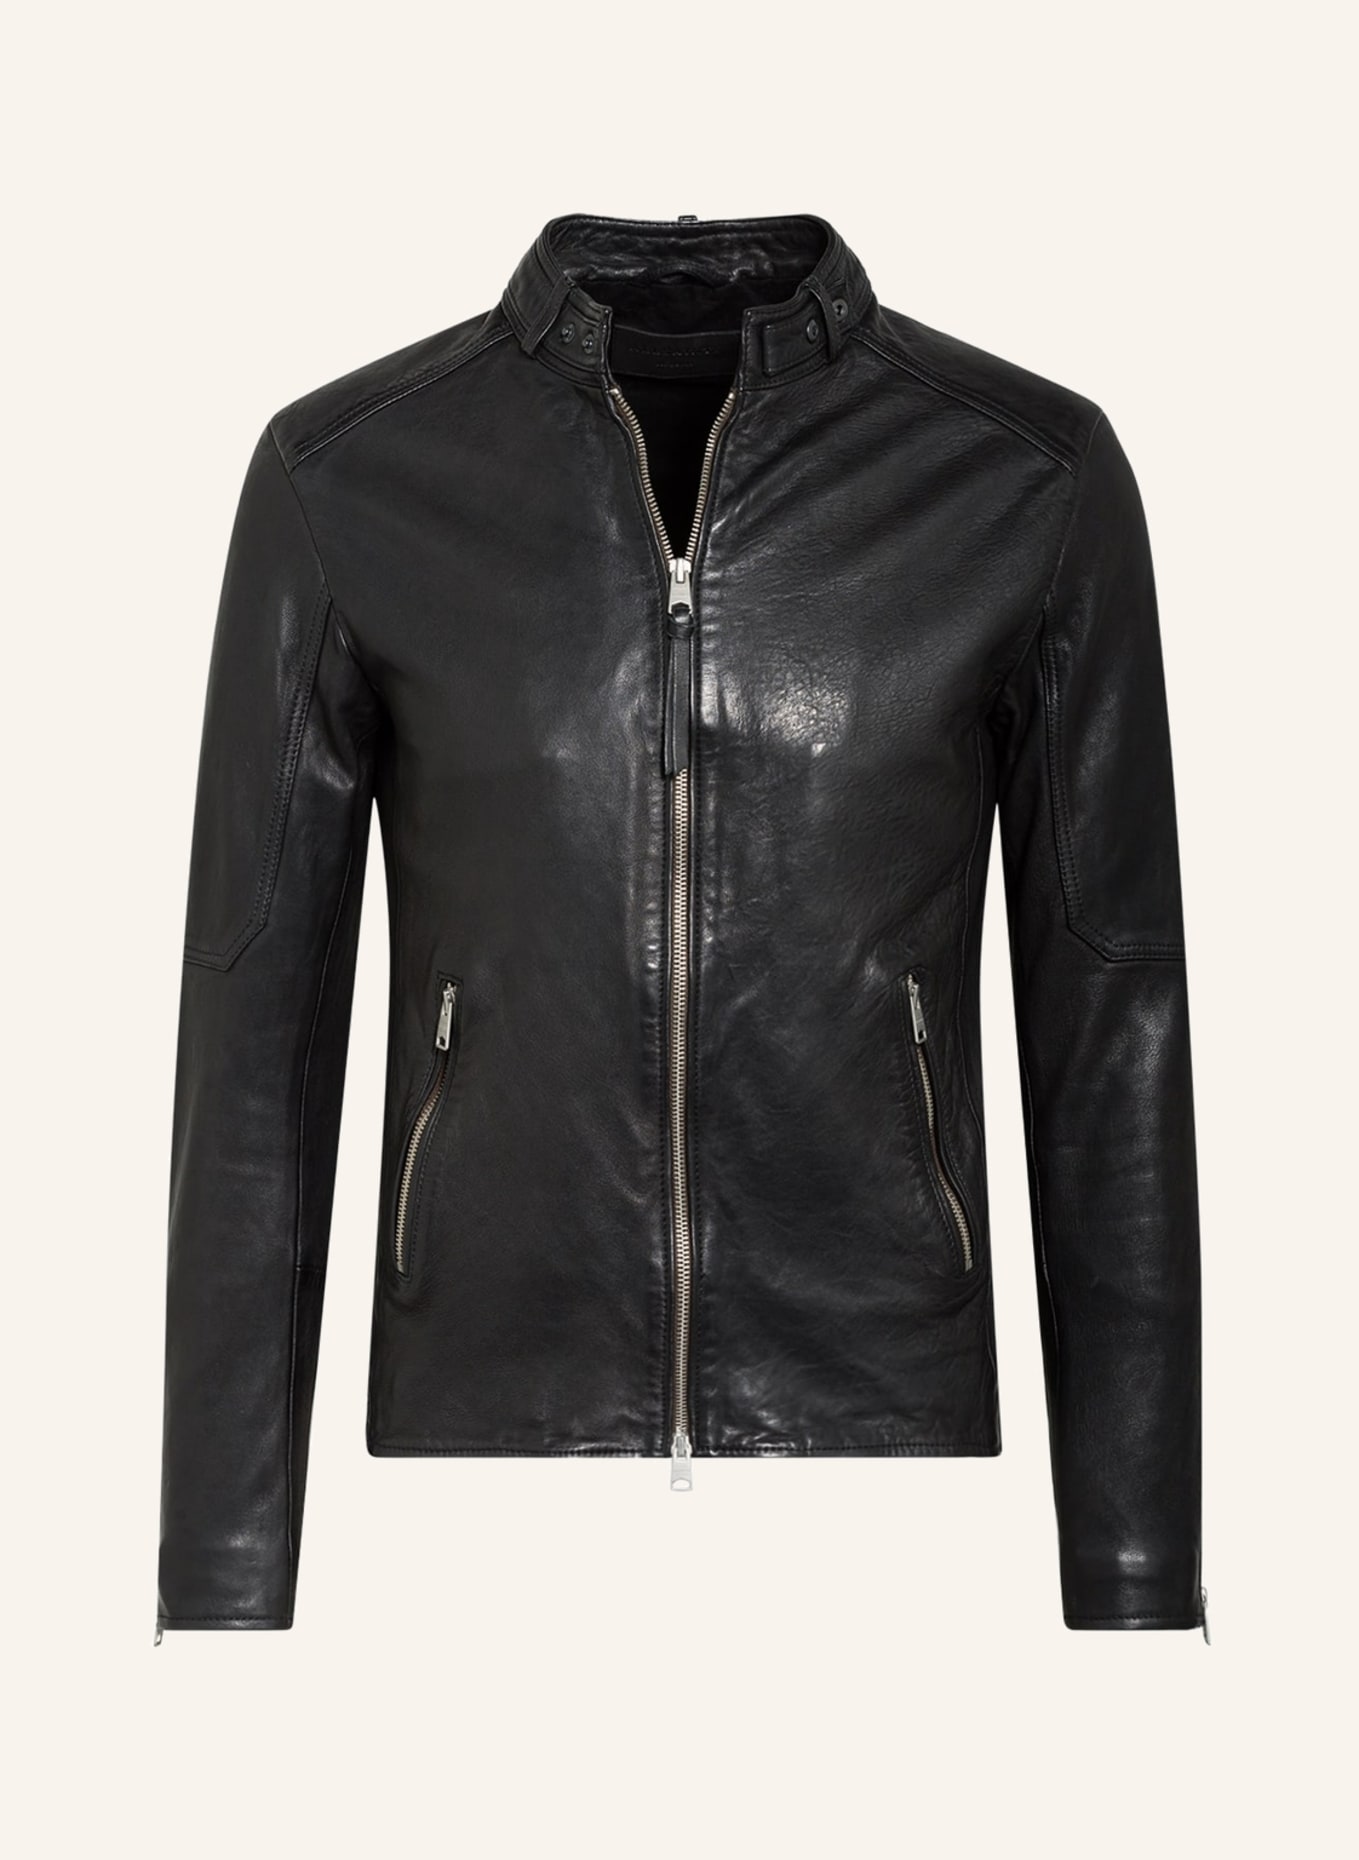 ALLSAINTS | Iconic Leather Jackets, Clothing & Accessories | Stylish jackets,  Leather jacket, Biker jacket men